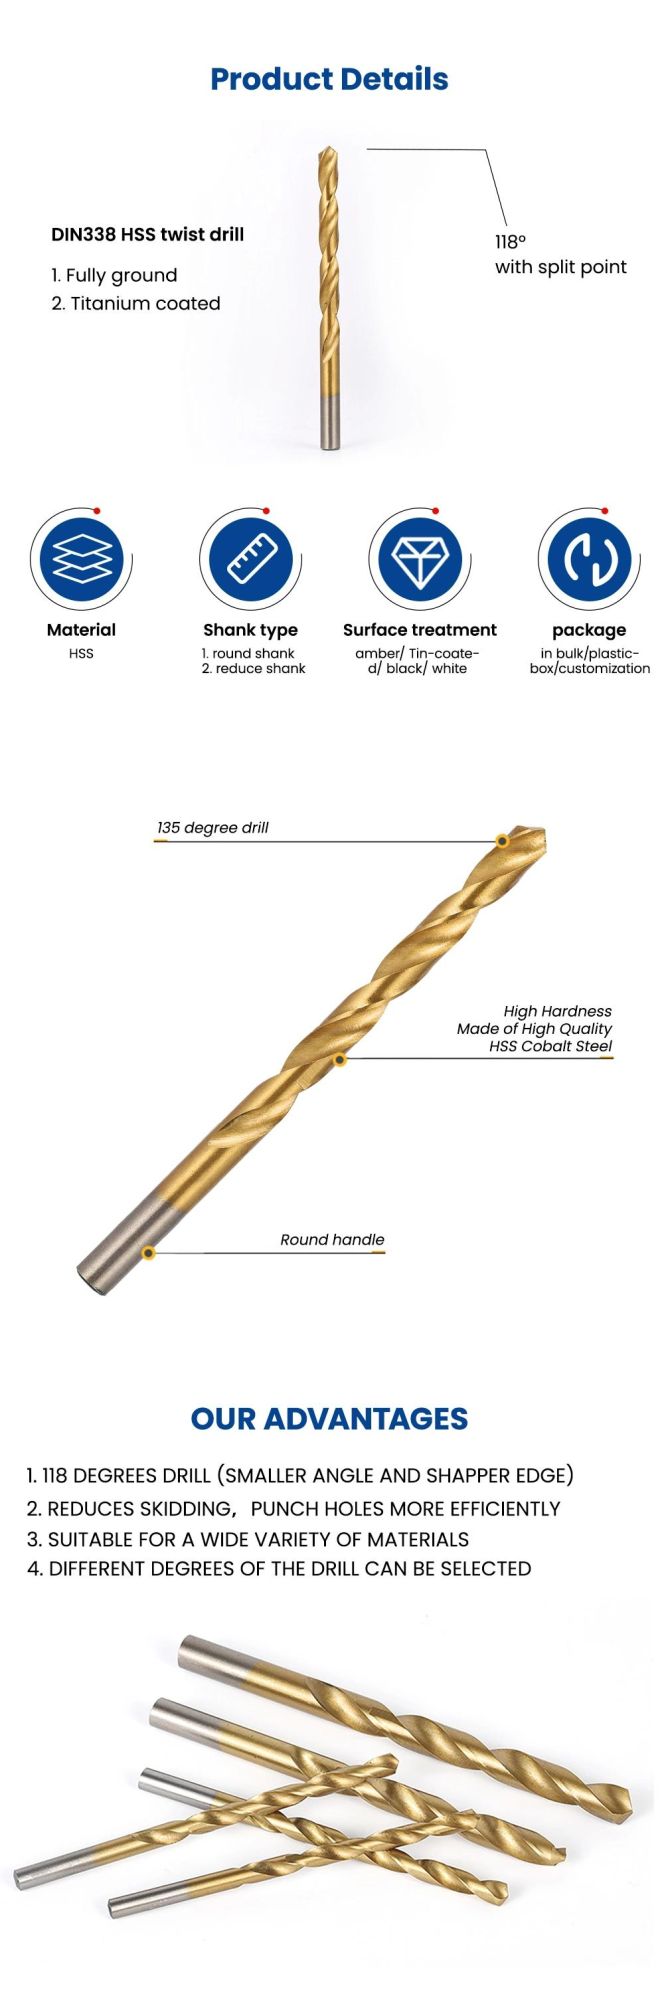 19 PCS HSS Cobalt/ Ton Coated Drill Bit Set 1mm-10mm for Drilling Wood, Aluminium, Plastic, Metal